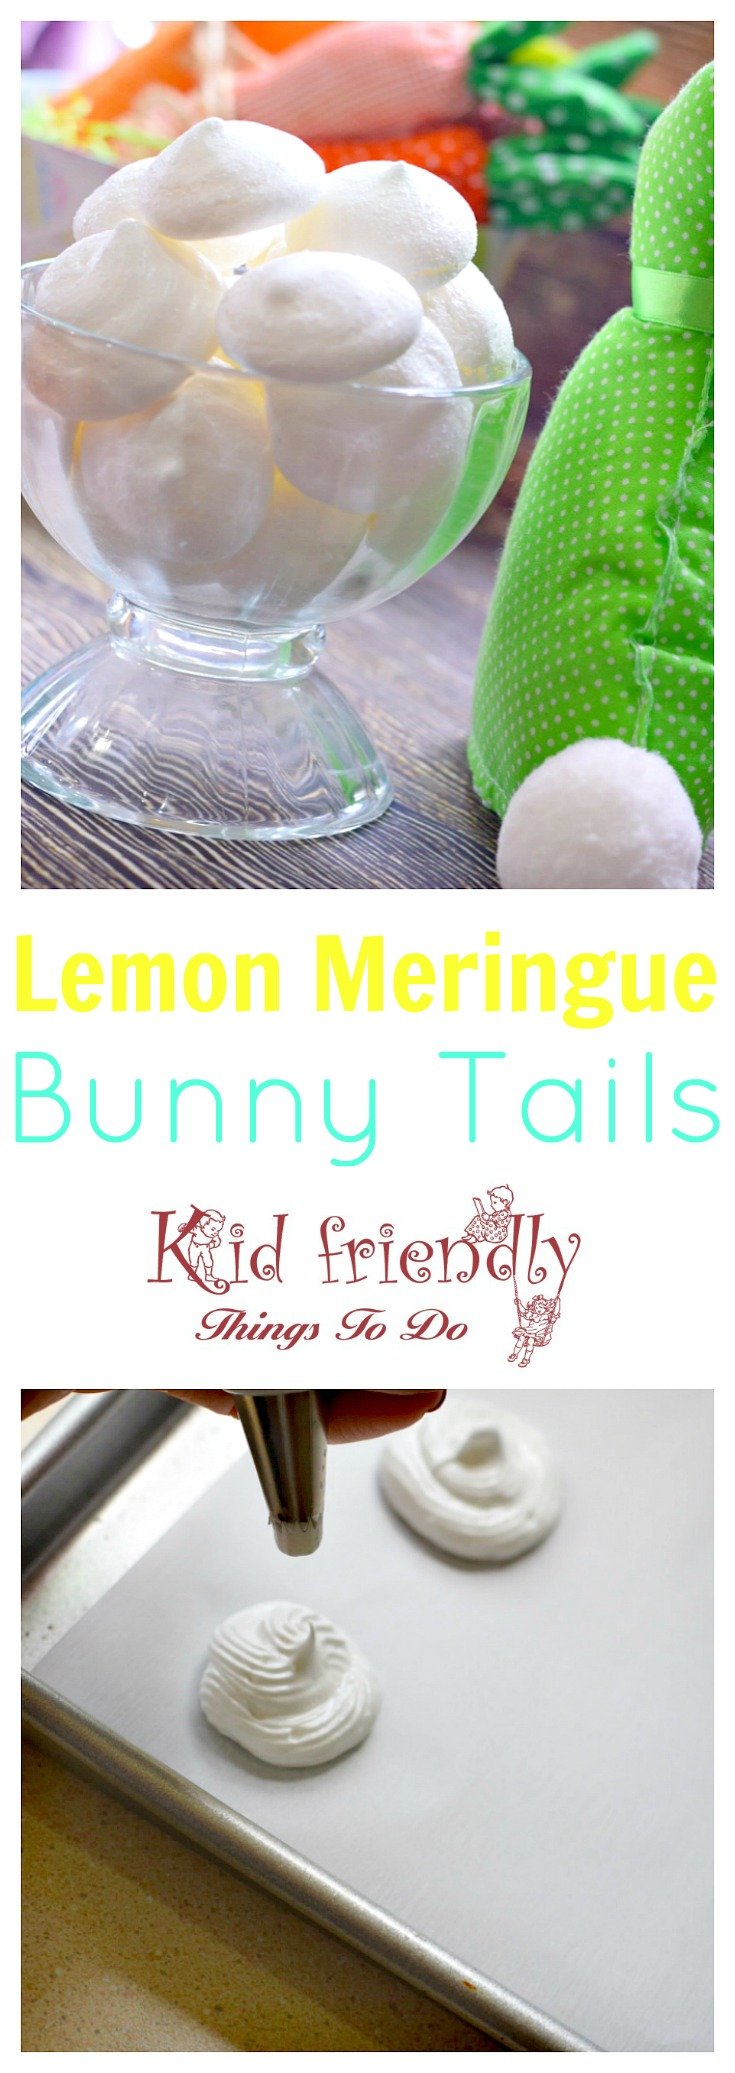 Lemon Meringue Bunny Tail Cookie Recipe for a fun Easter, spring or summer treat! www.kidfriendlythingstodo.com fun food idea for kids